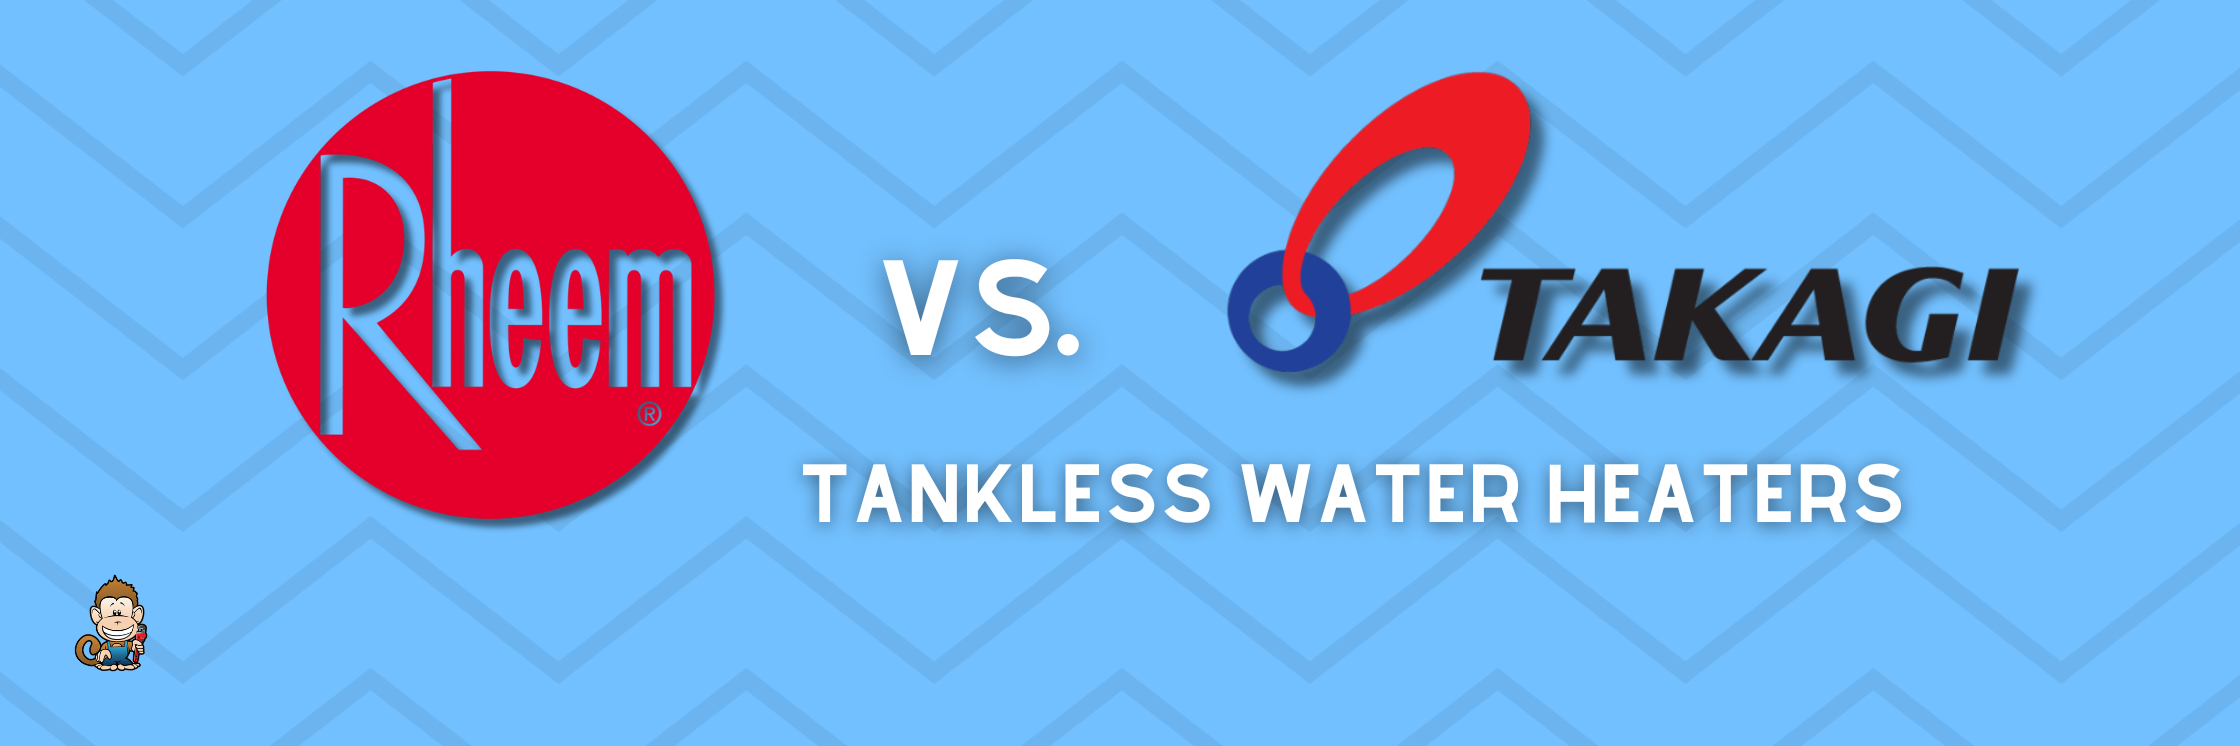 Rheem vs. Takagi Tankless Water Heaters